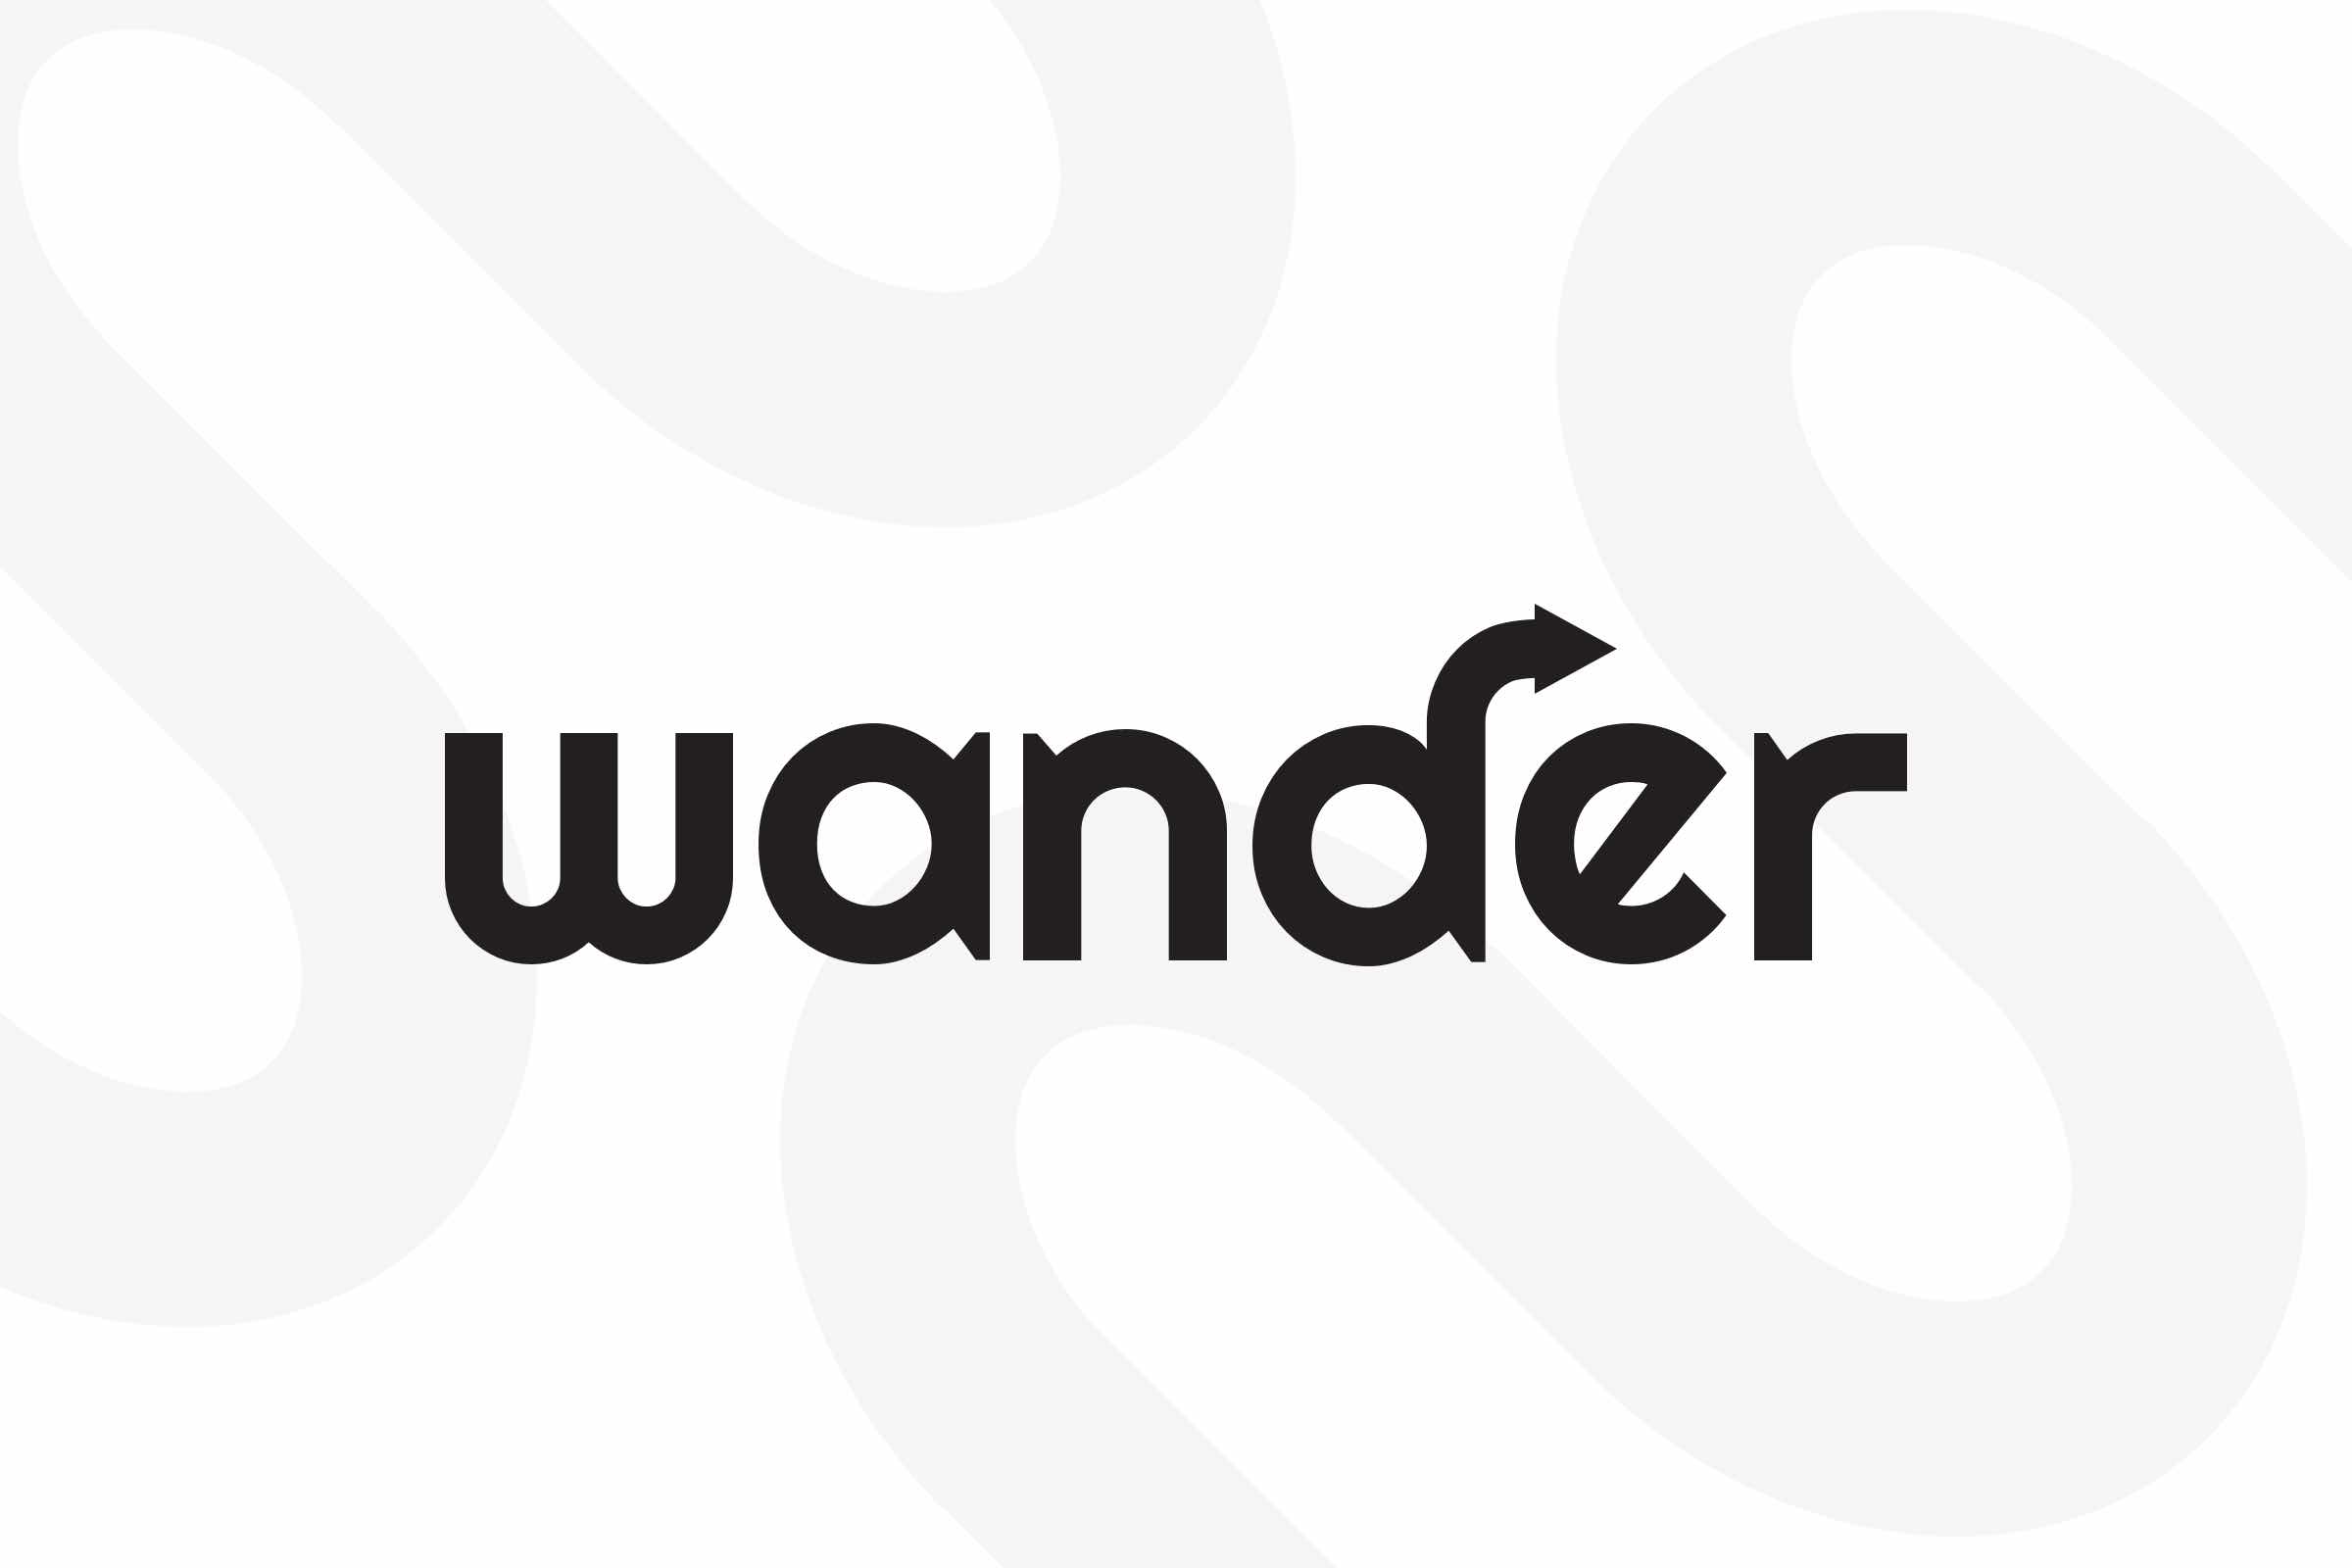 logo for wander brand on stylized background